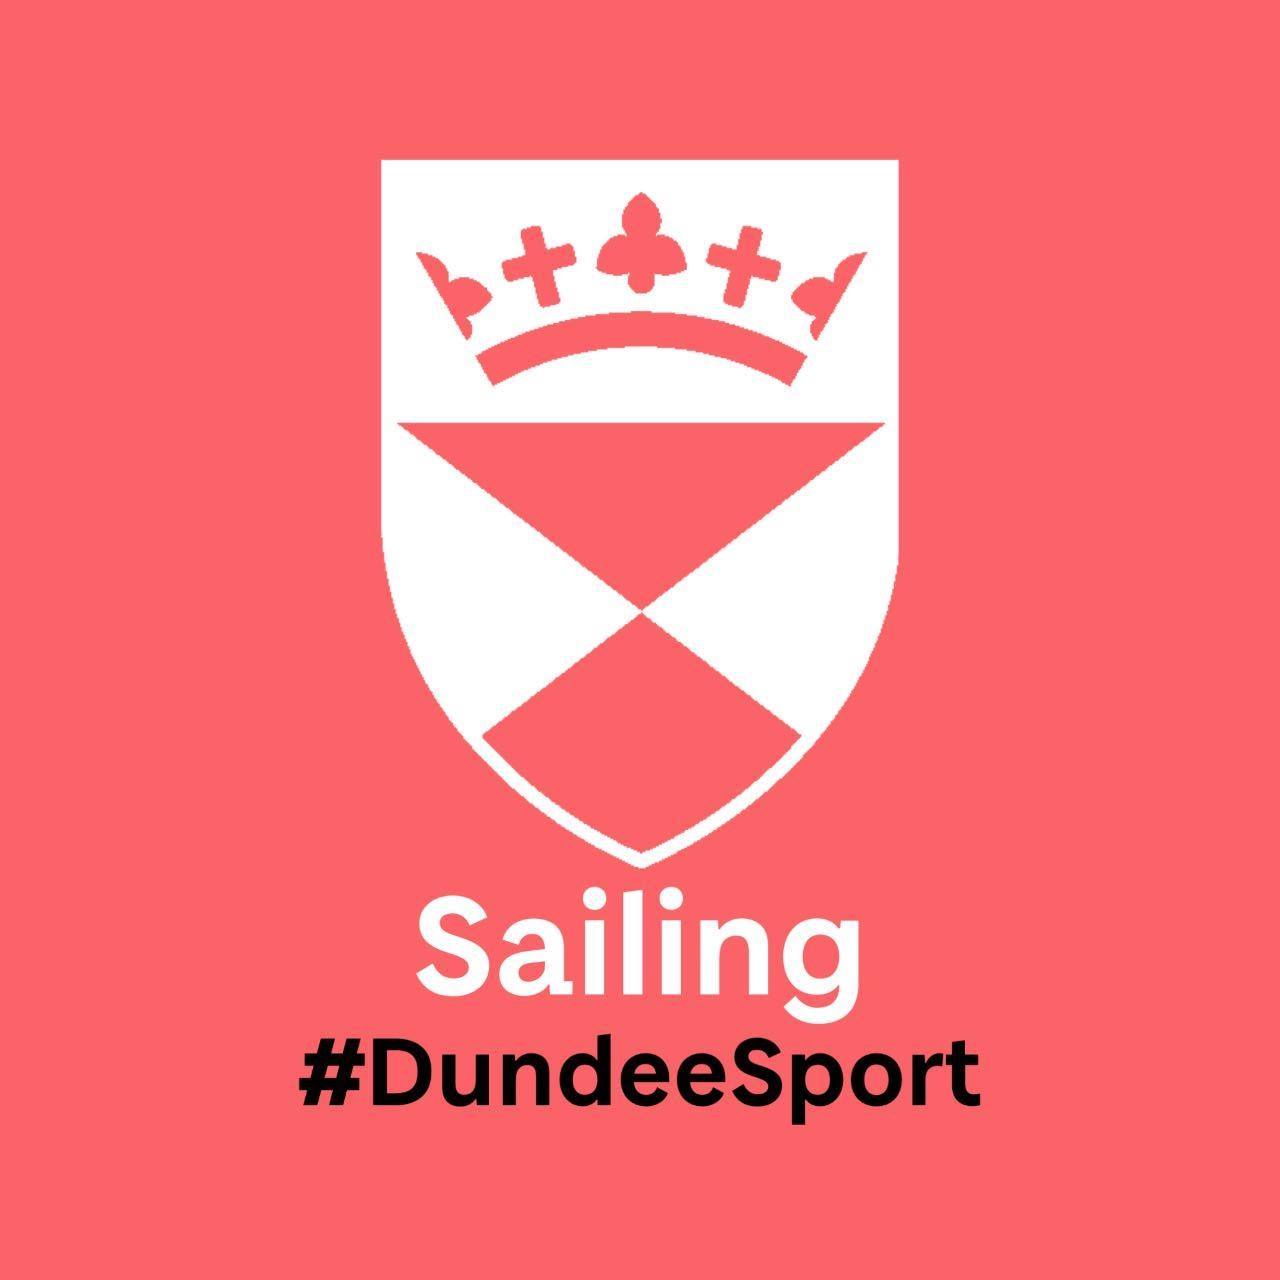 University of Dundee Sailing Club